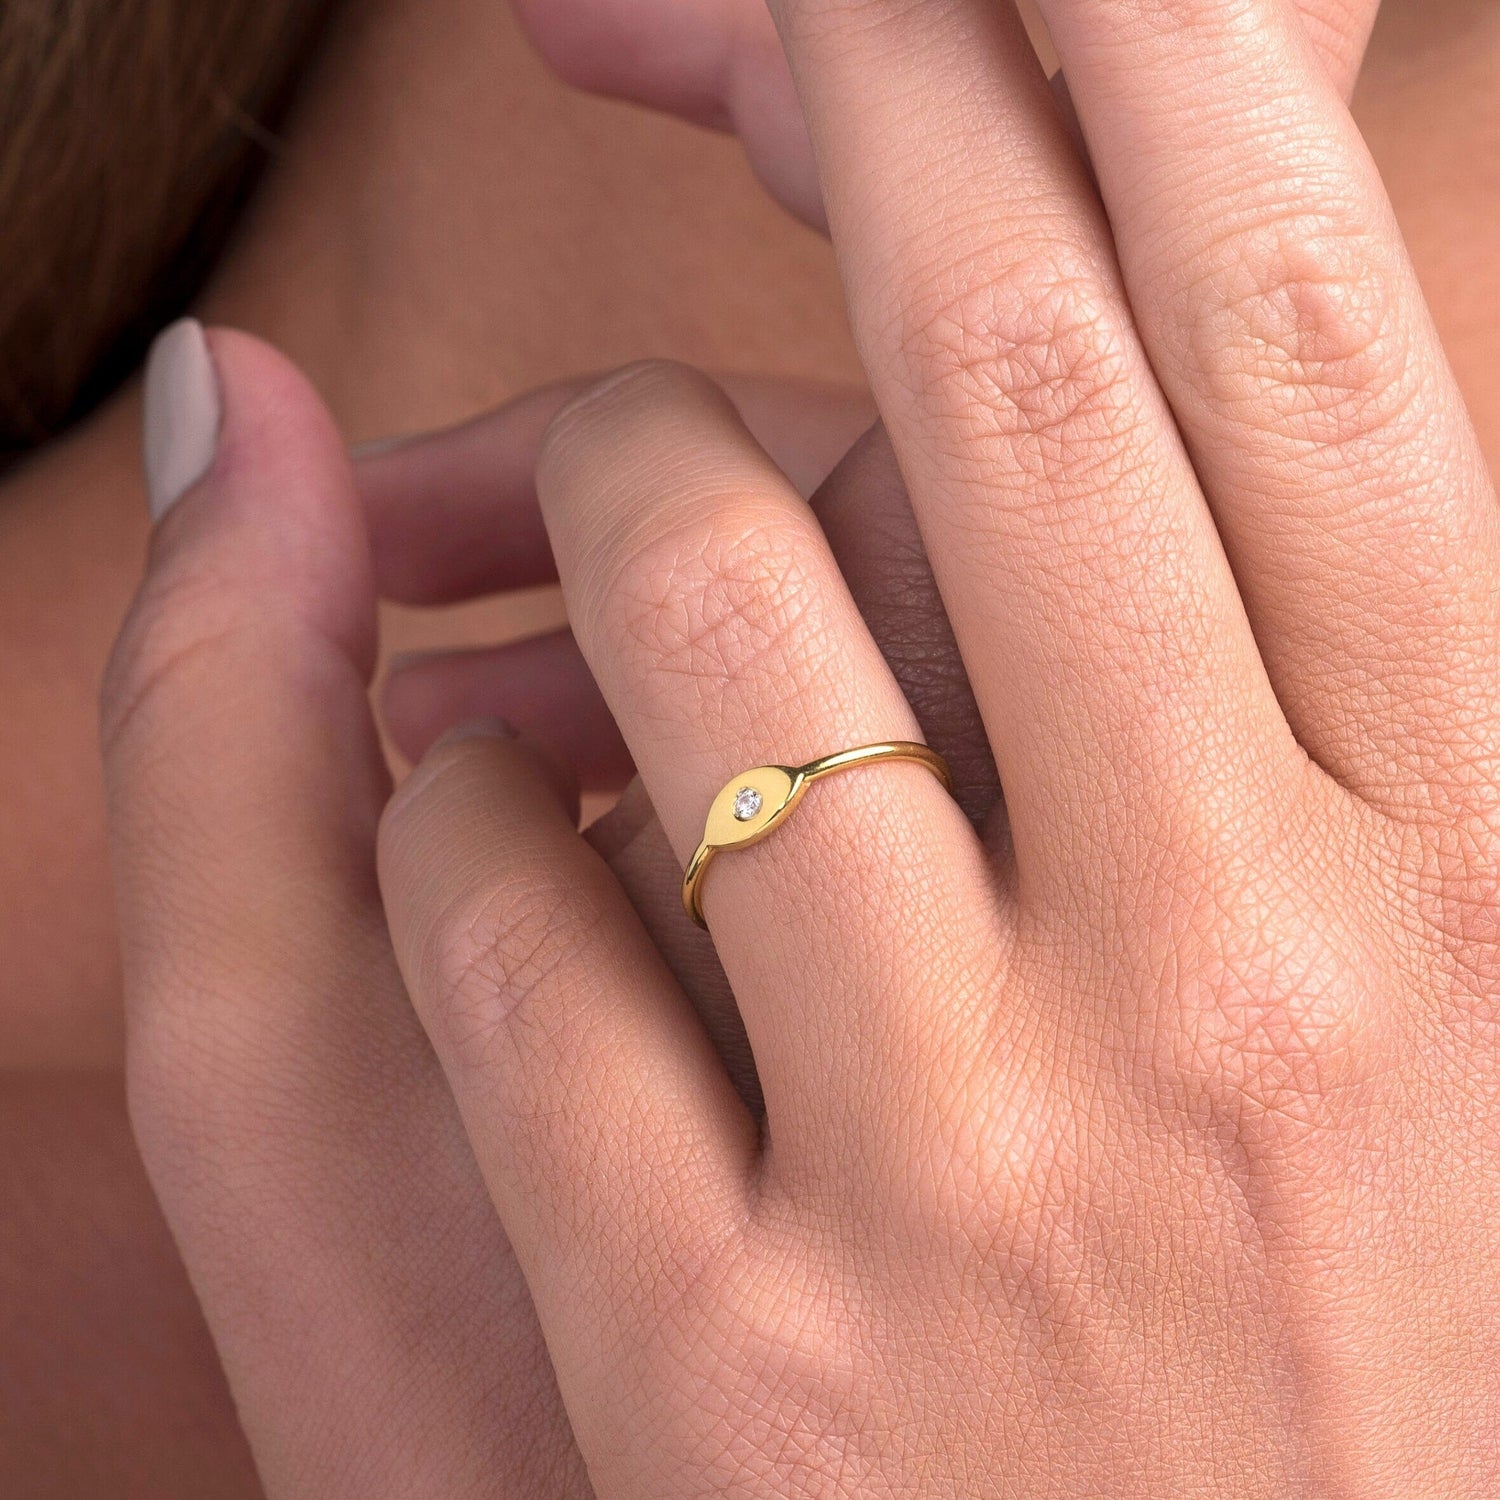 14k Gold Evil Eye Ring / White Gold Evil Eye Diamond Ring / Protection Ring / Stacking Evil Eye Ring / Dainty Everyday Ring / Christmas Sale